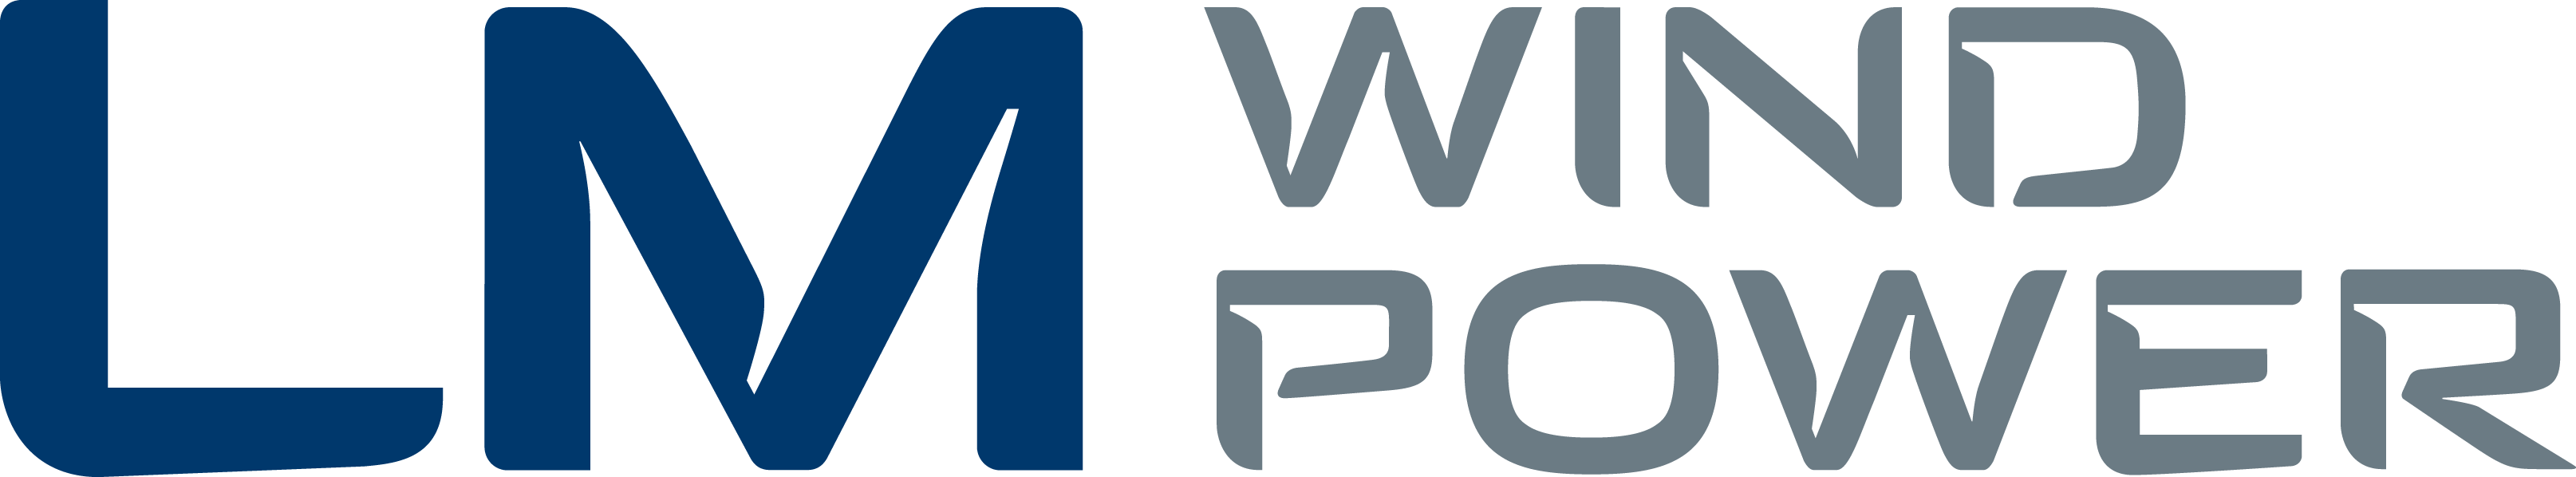 LMWP-Logo-CMYK